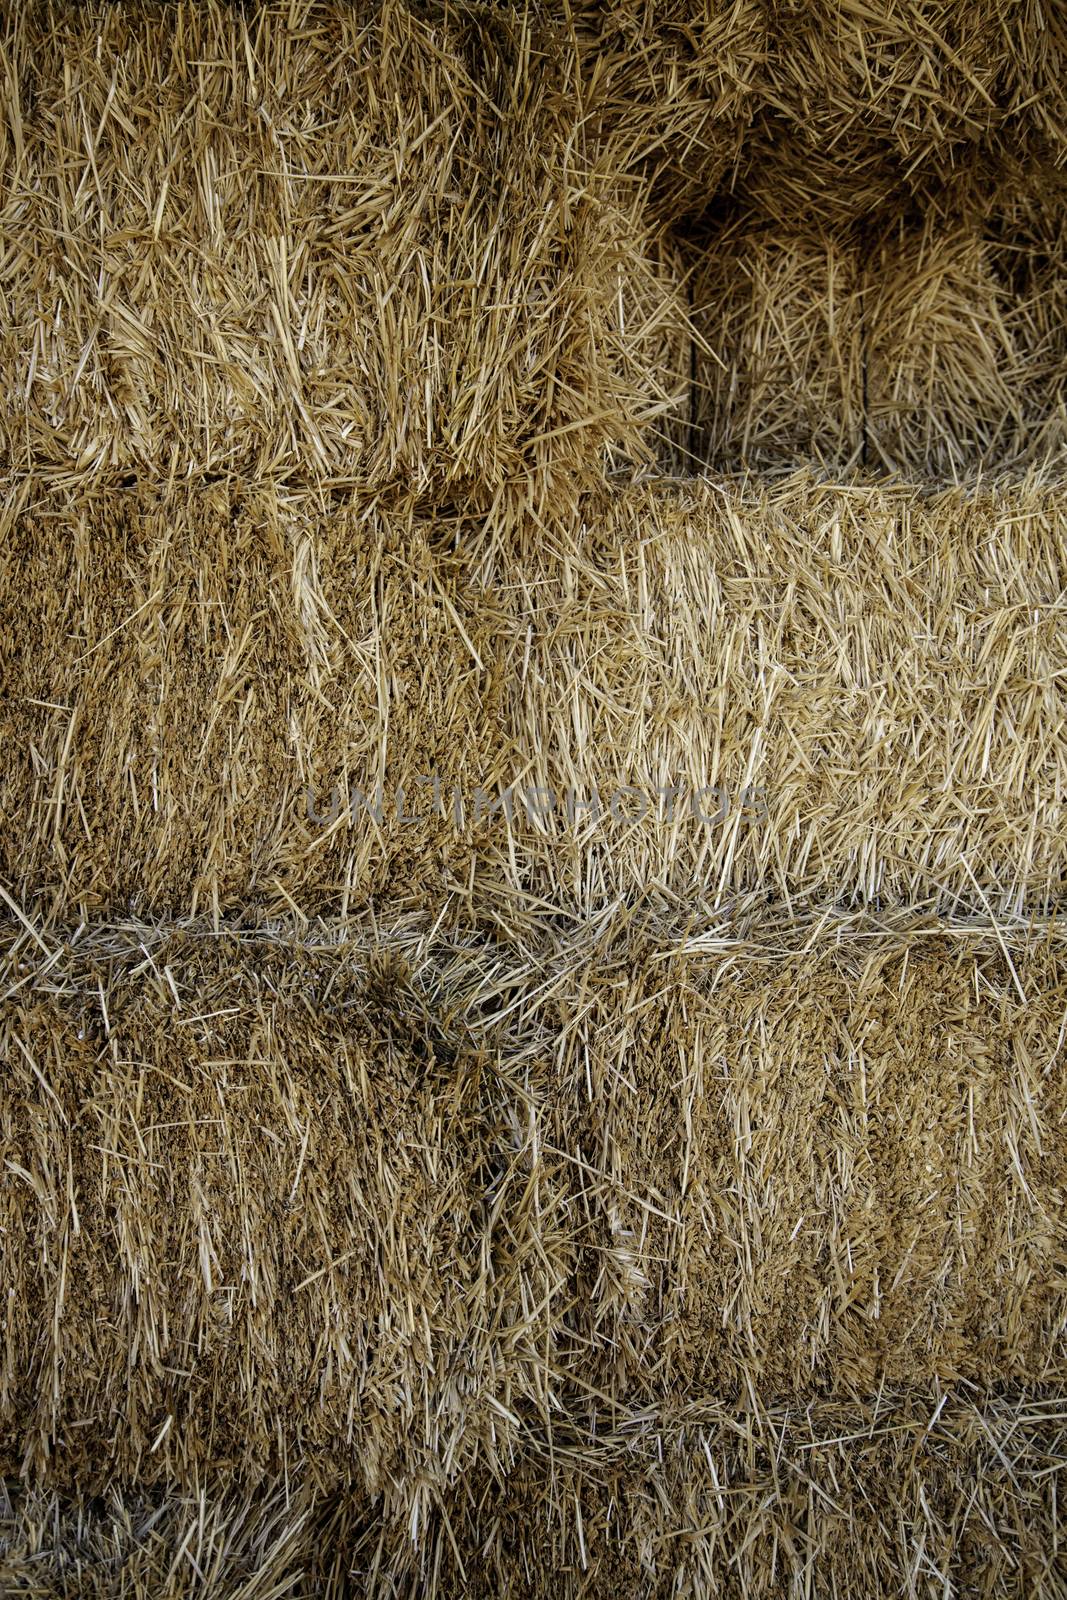 Dry wheat in freshly harvested branch by esebene